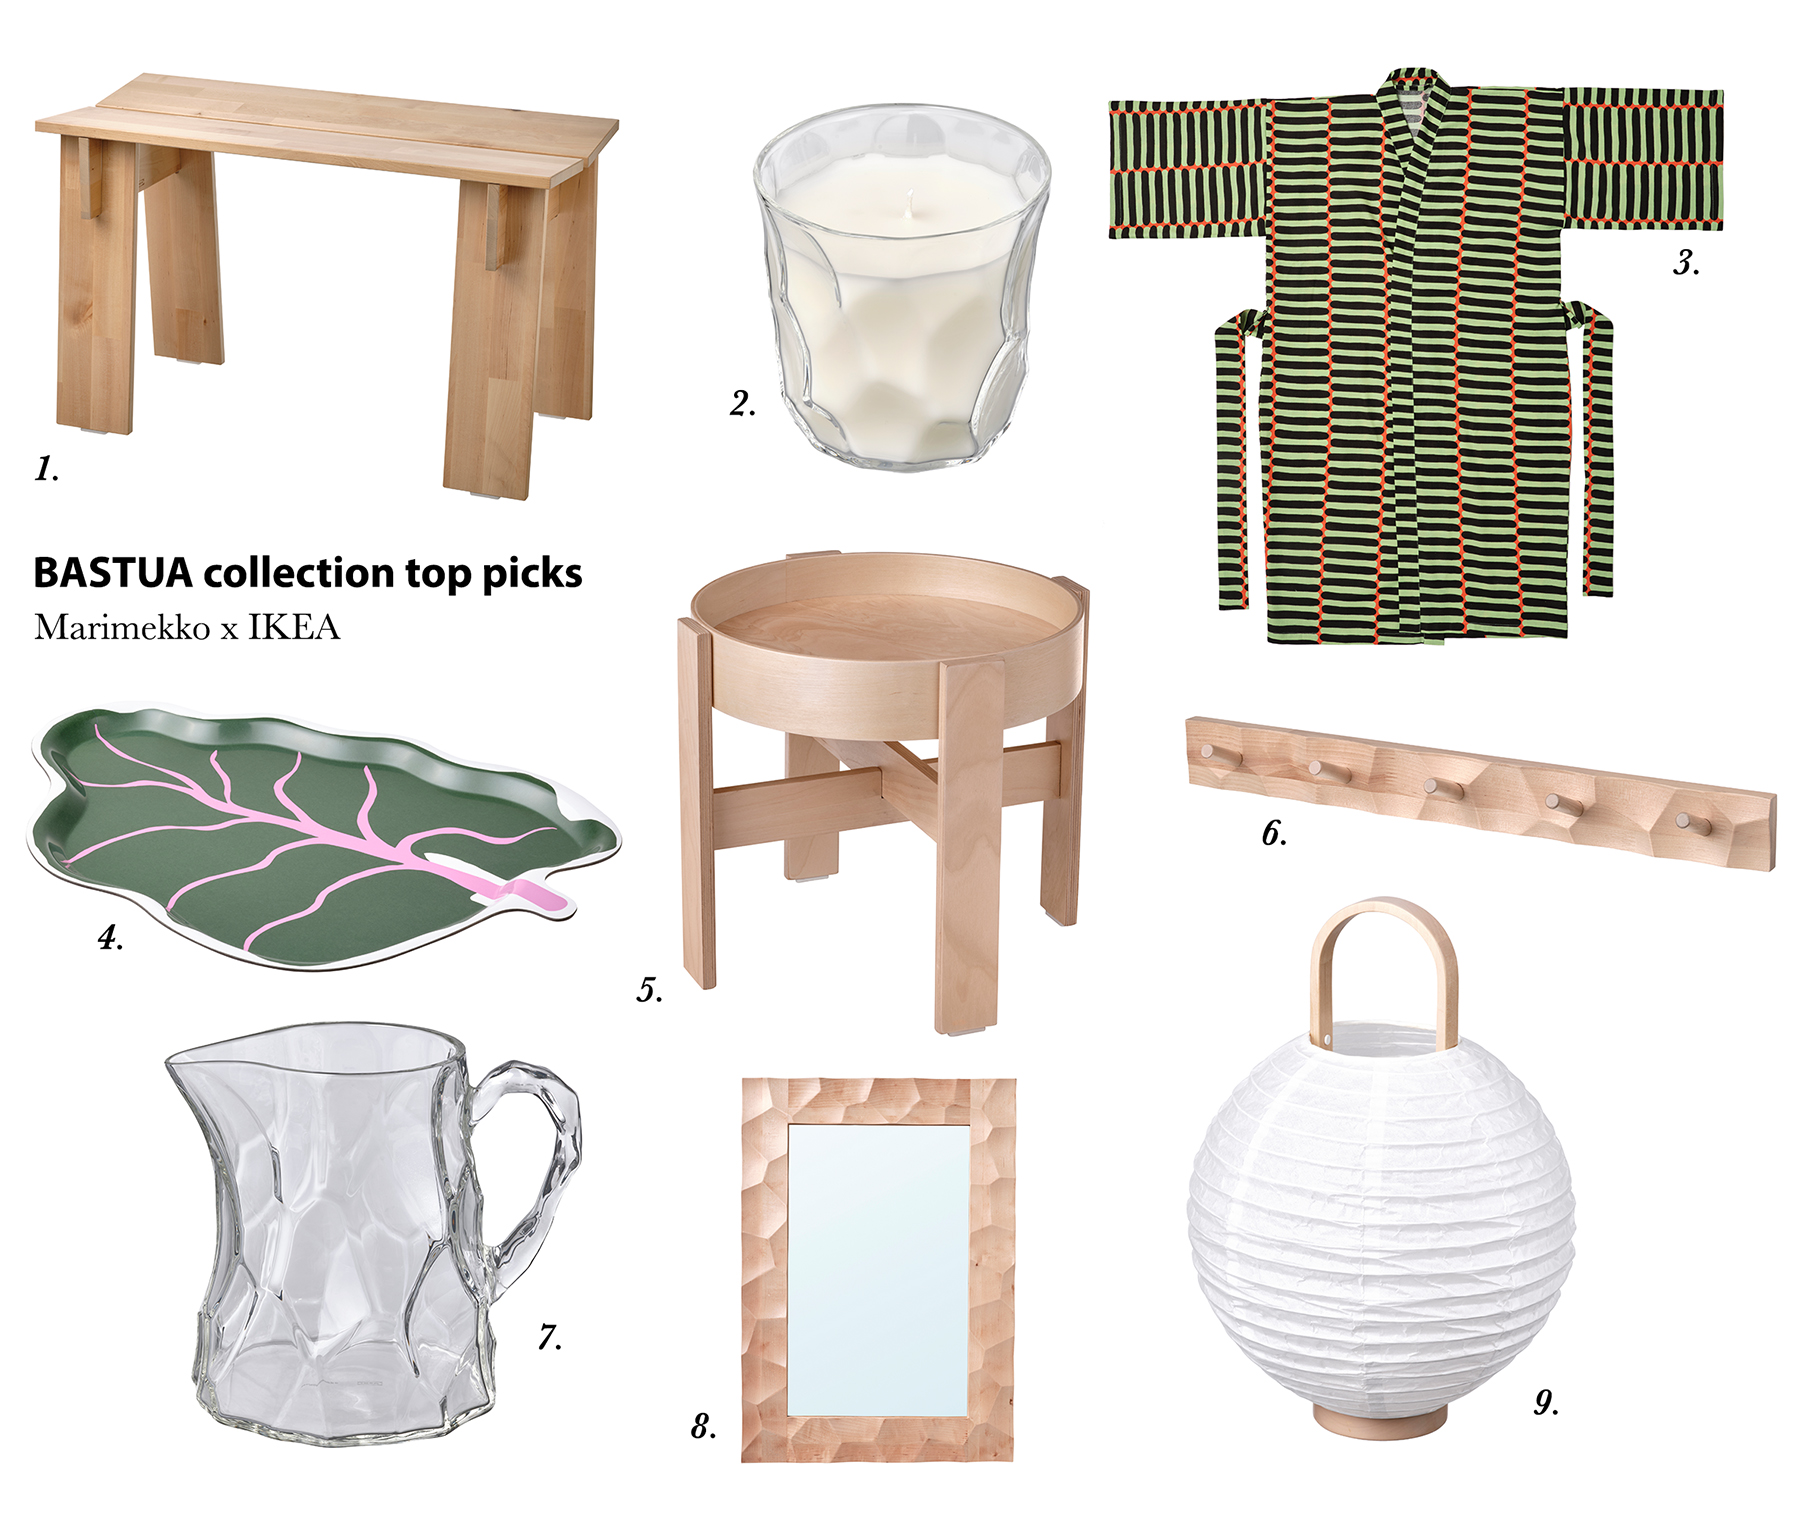 IKEA and Marimekko collaborate on a limited collection - IKEA Global